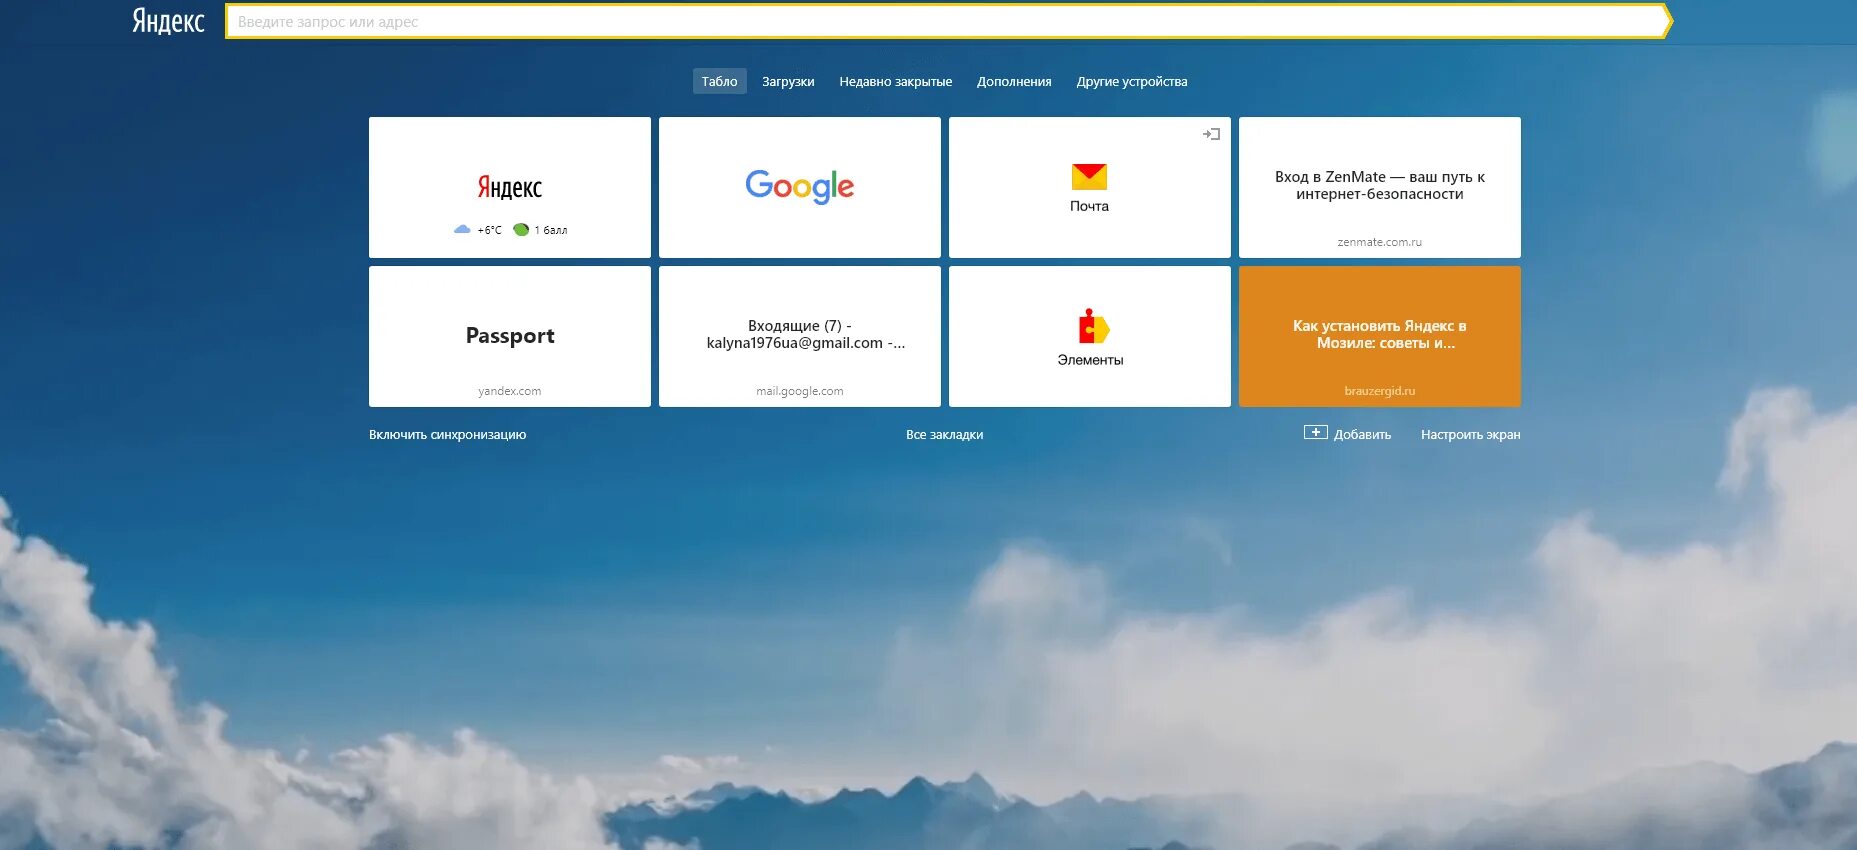 Как настроить фон. Яндекс темы. Темы для Яндекс браузера. Тема на Яндекс страницу. Изменить фон в Яндекс браузере.